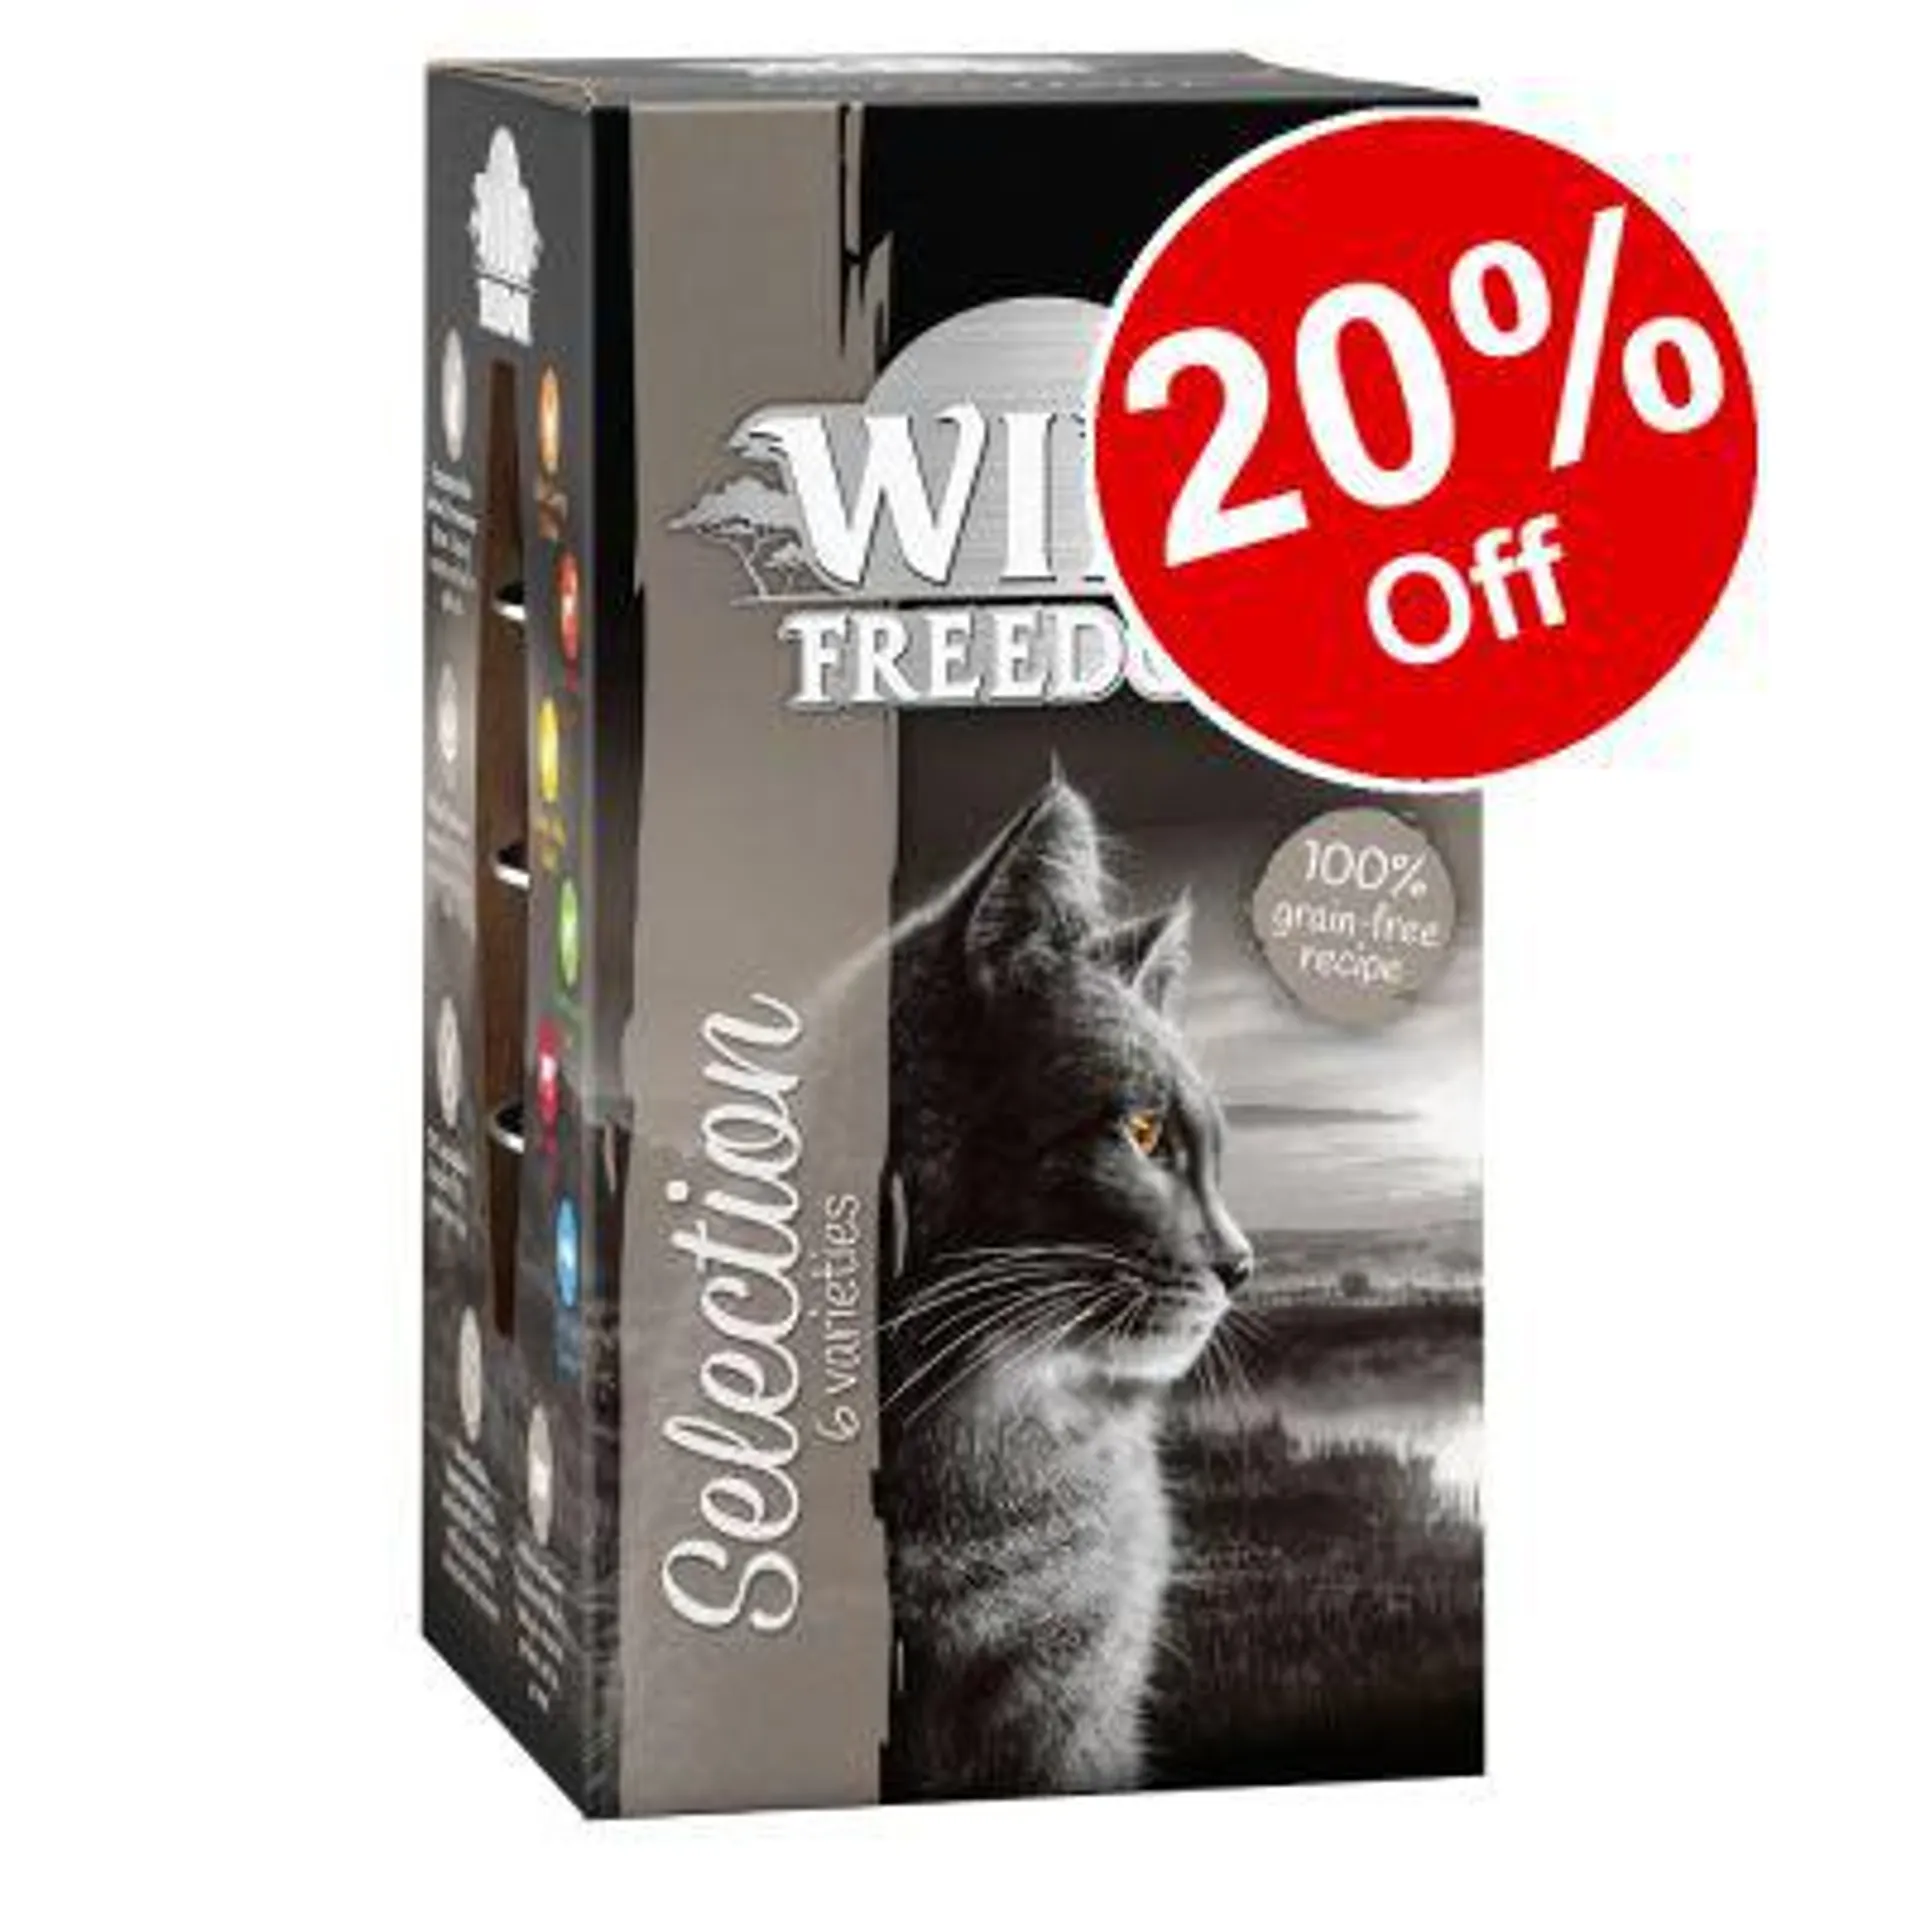 6 x 85g Wild Freedom Adult Trays Wet Cat Food - 20% Off!*